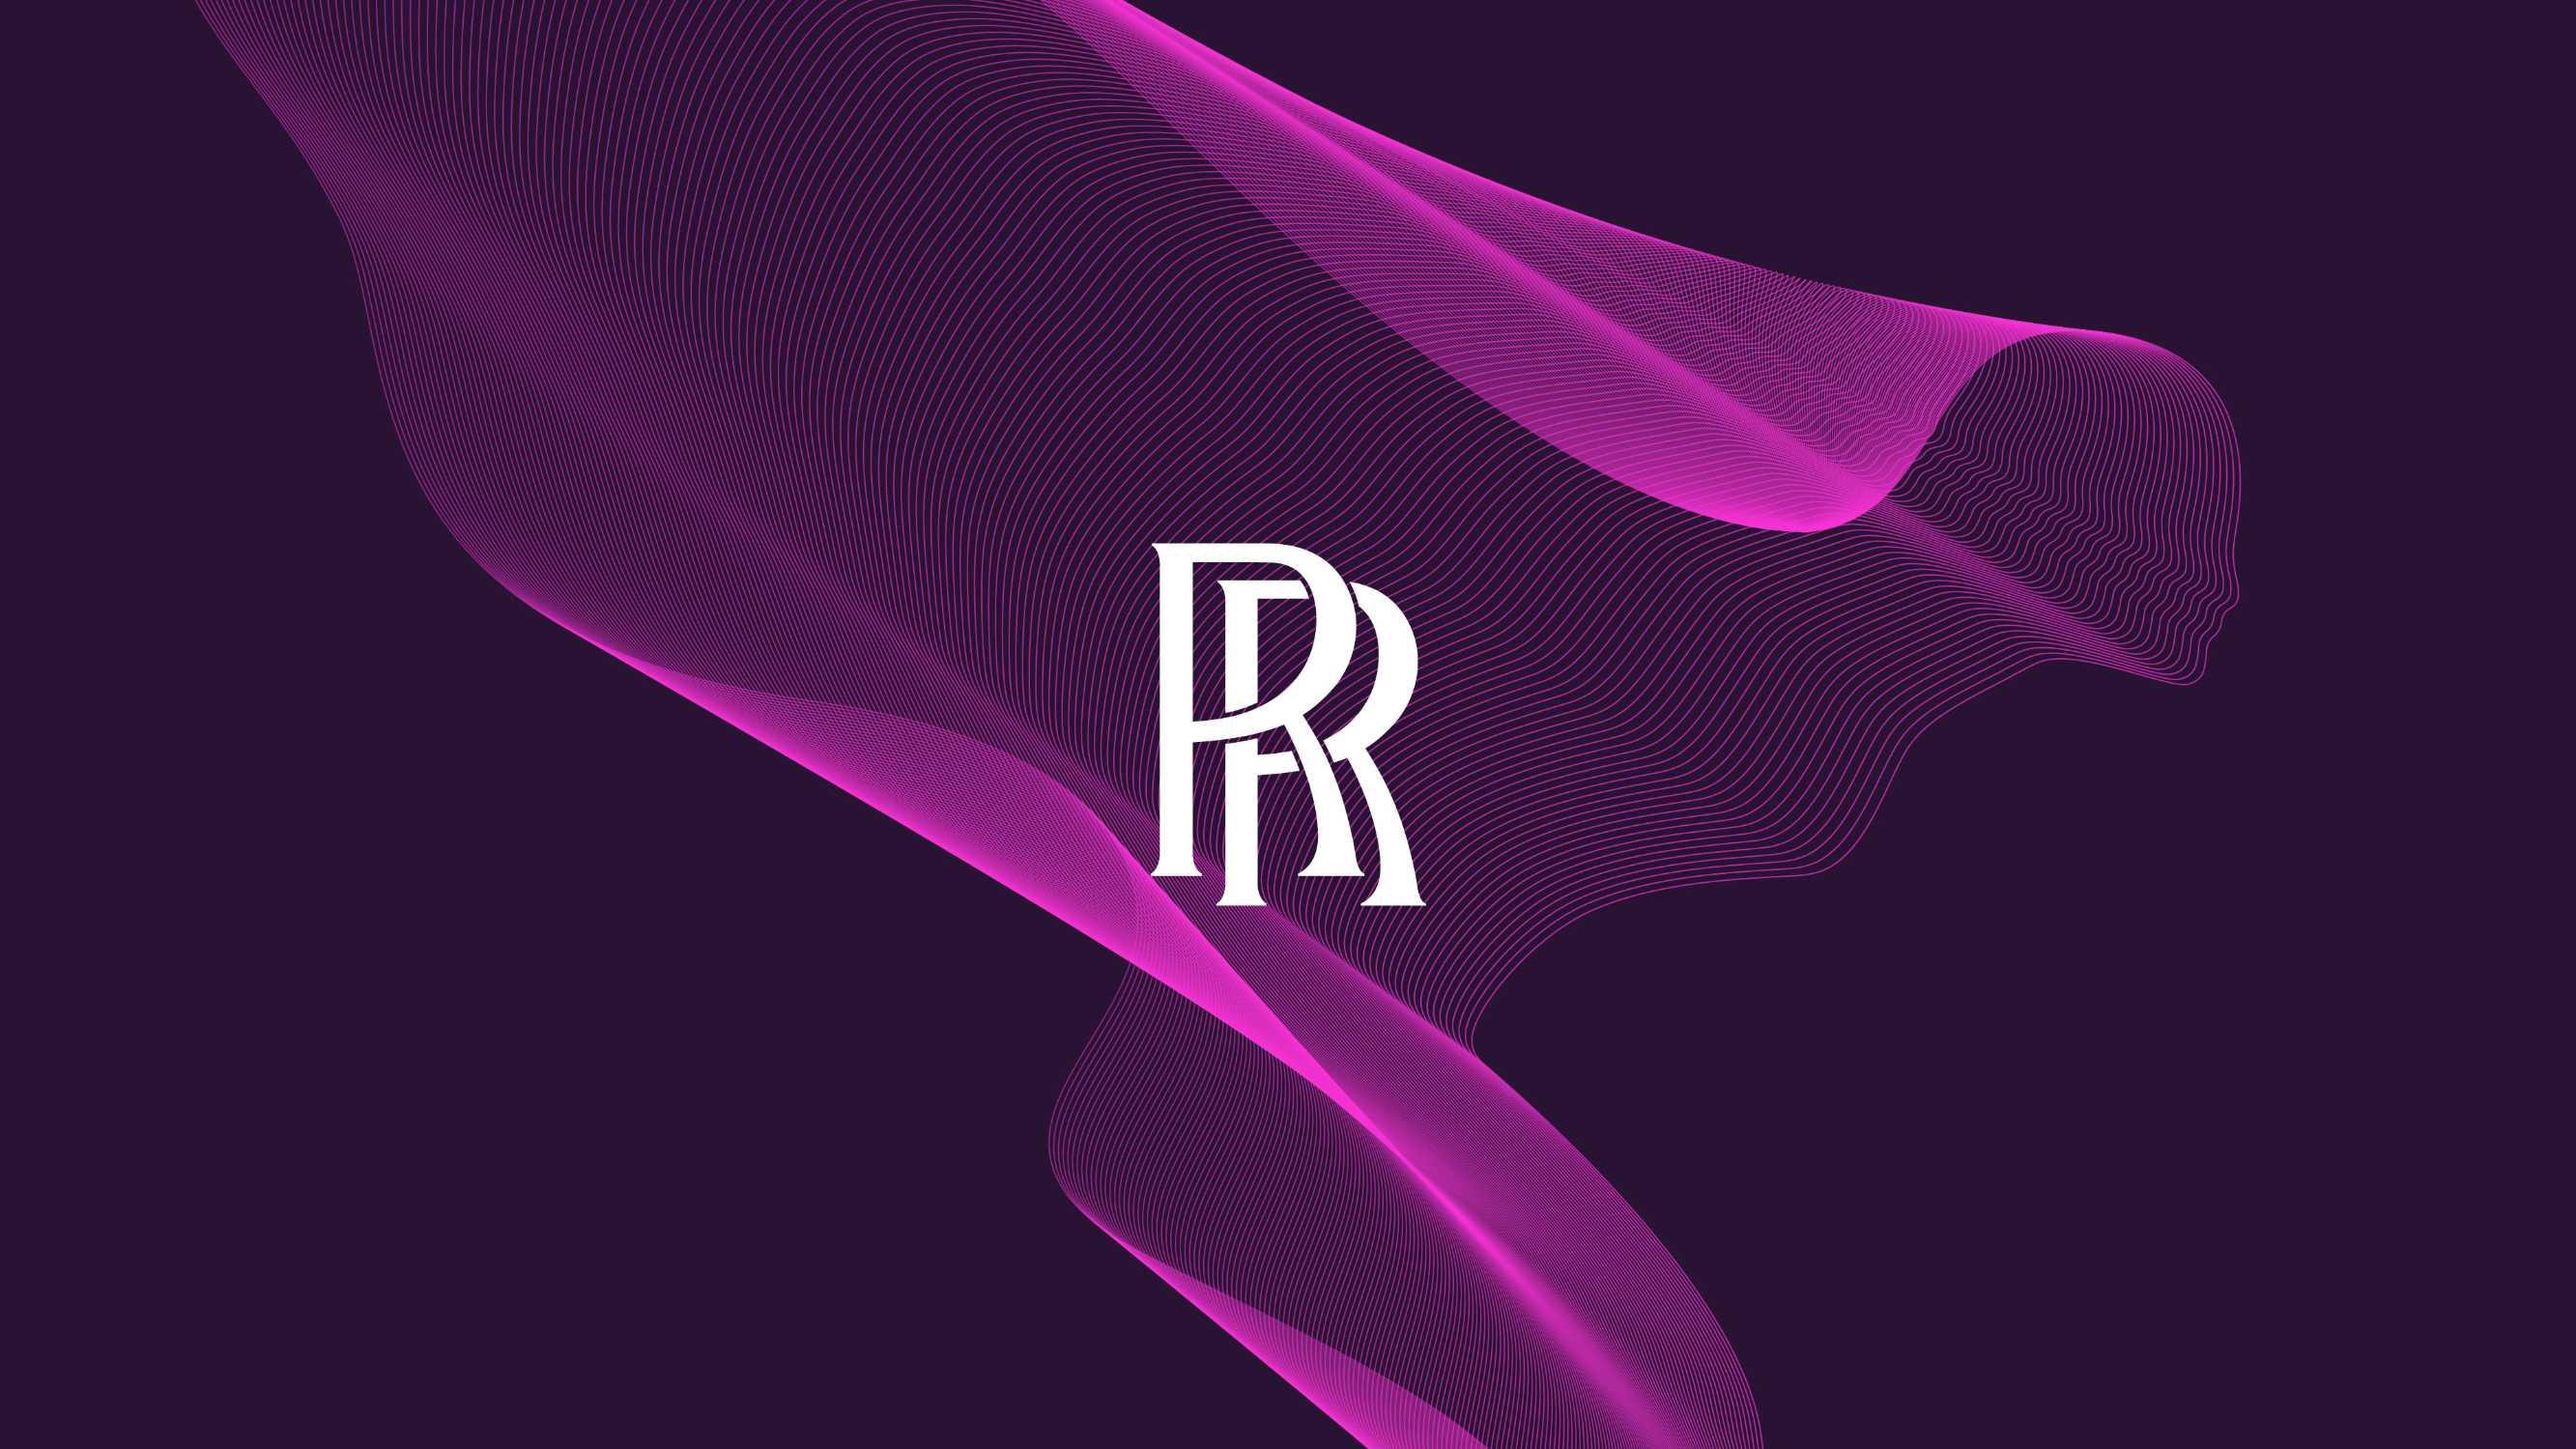 rolls-royce-announces-new-brand-identity